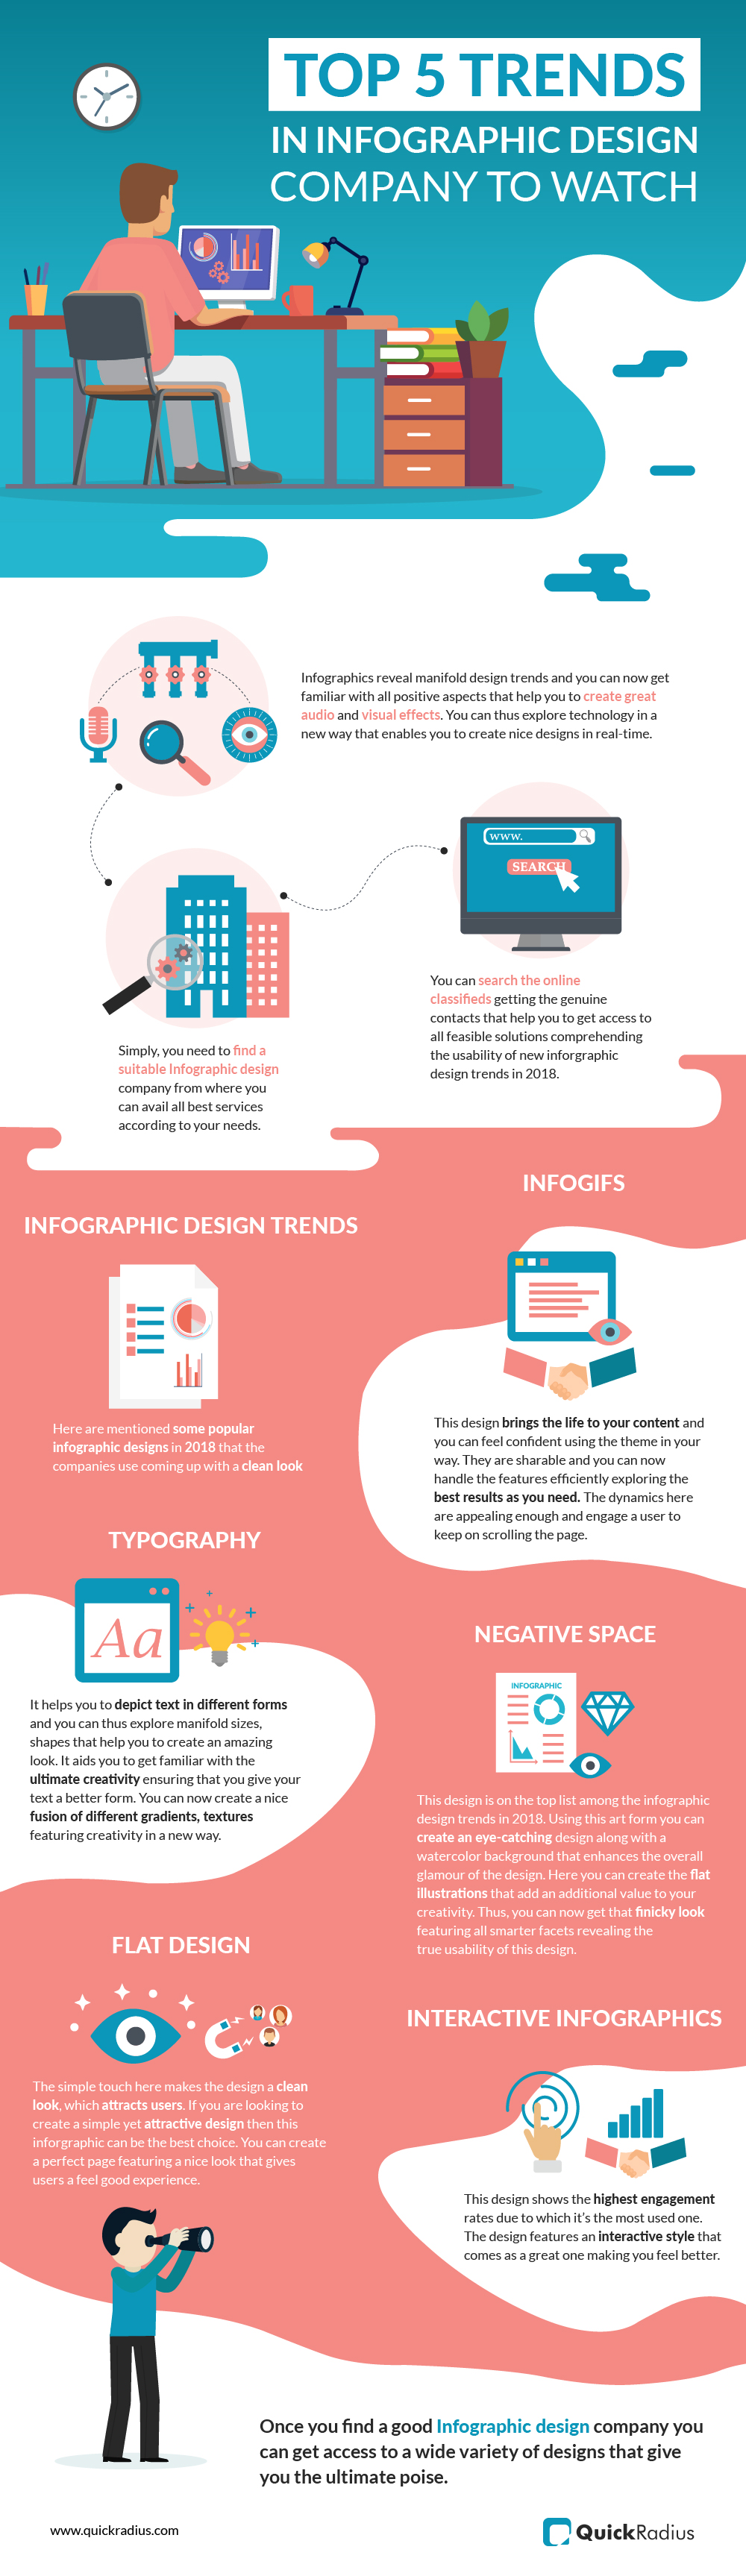 infographic design trends